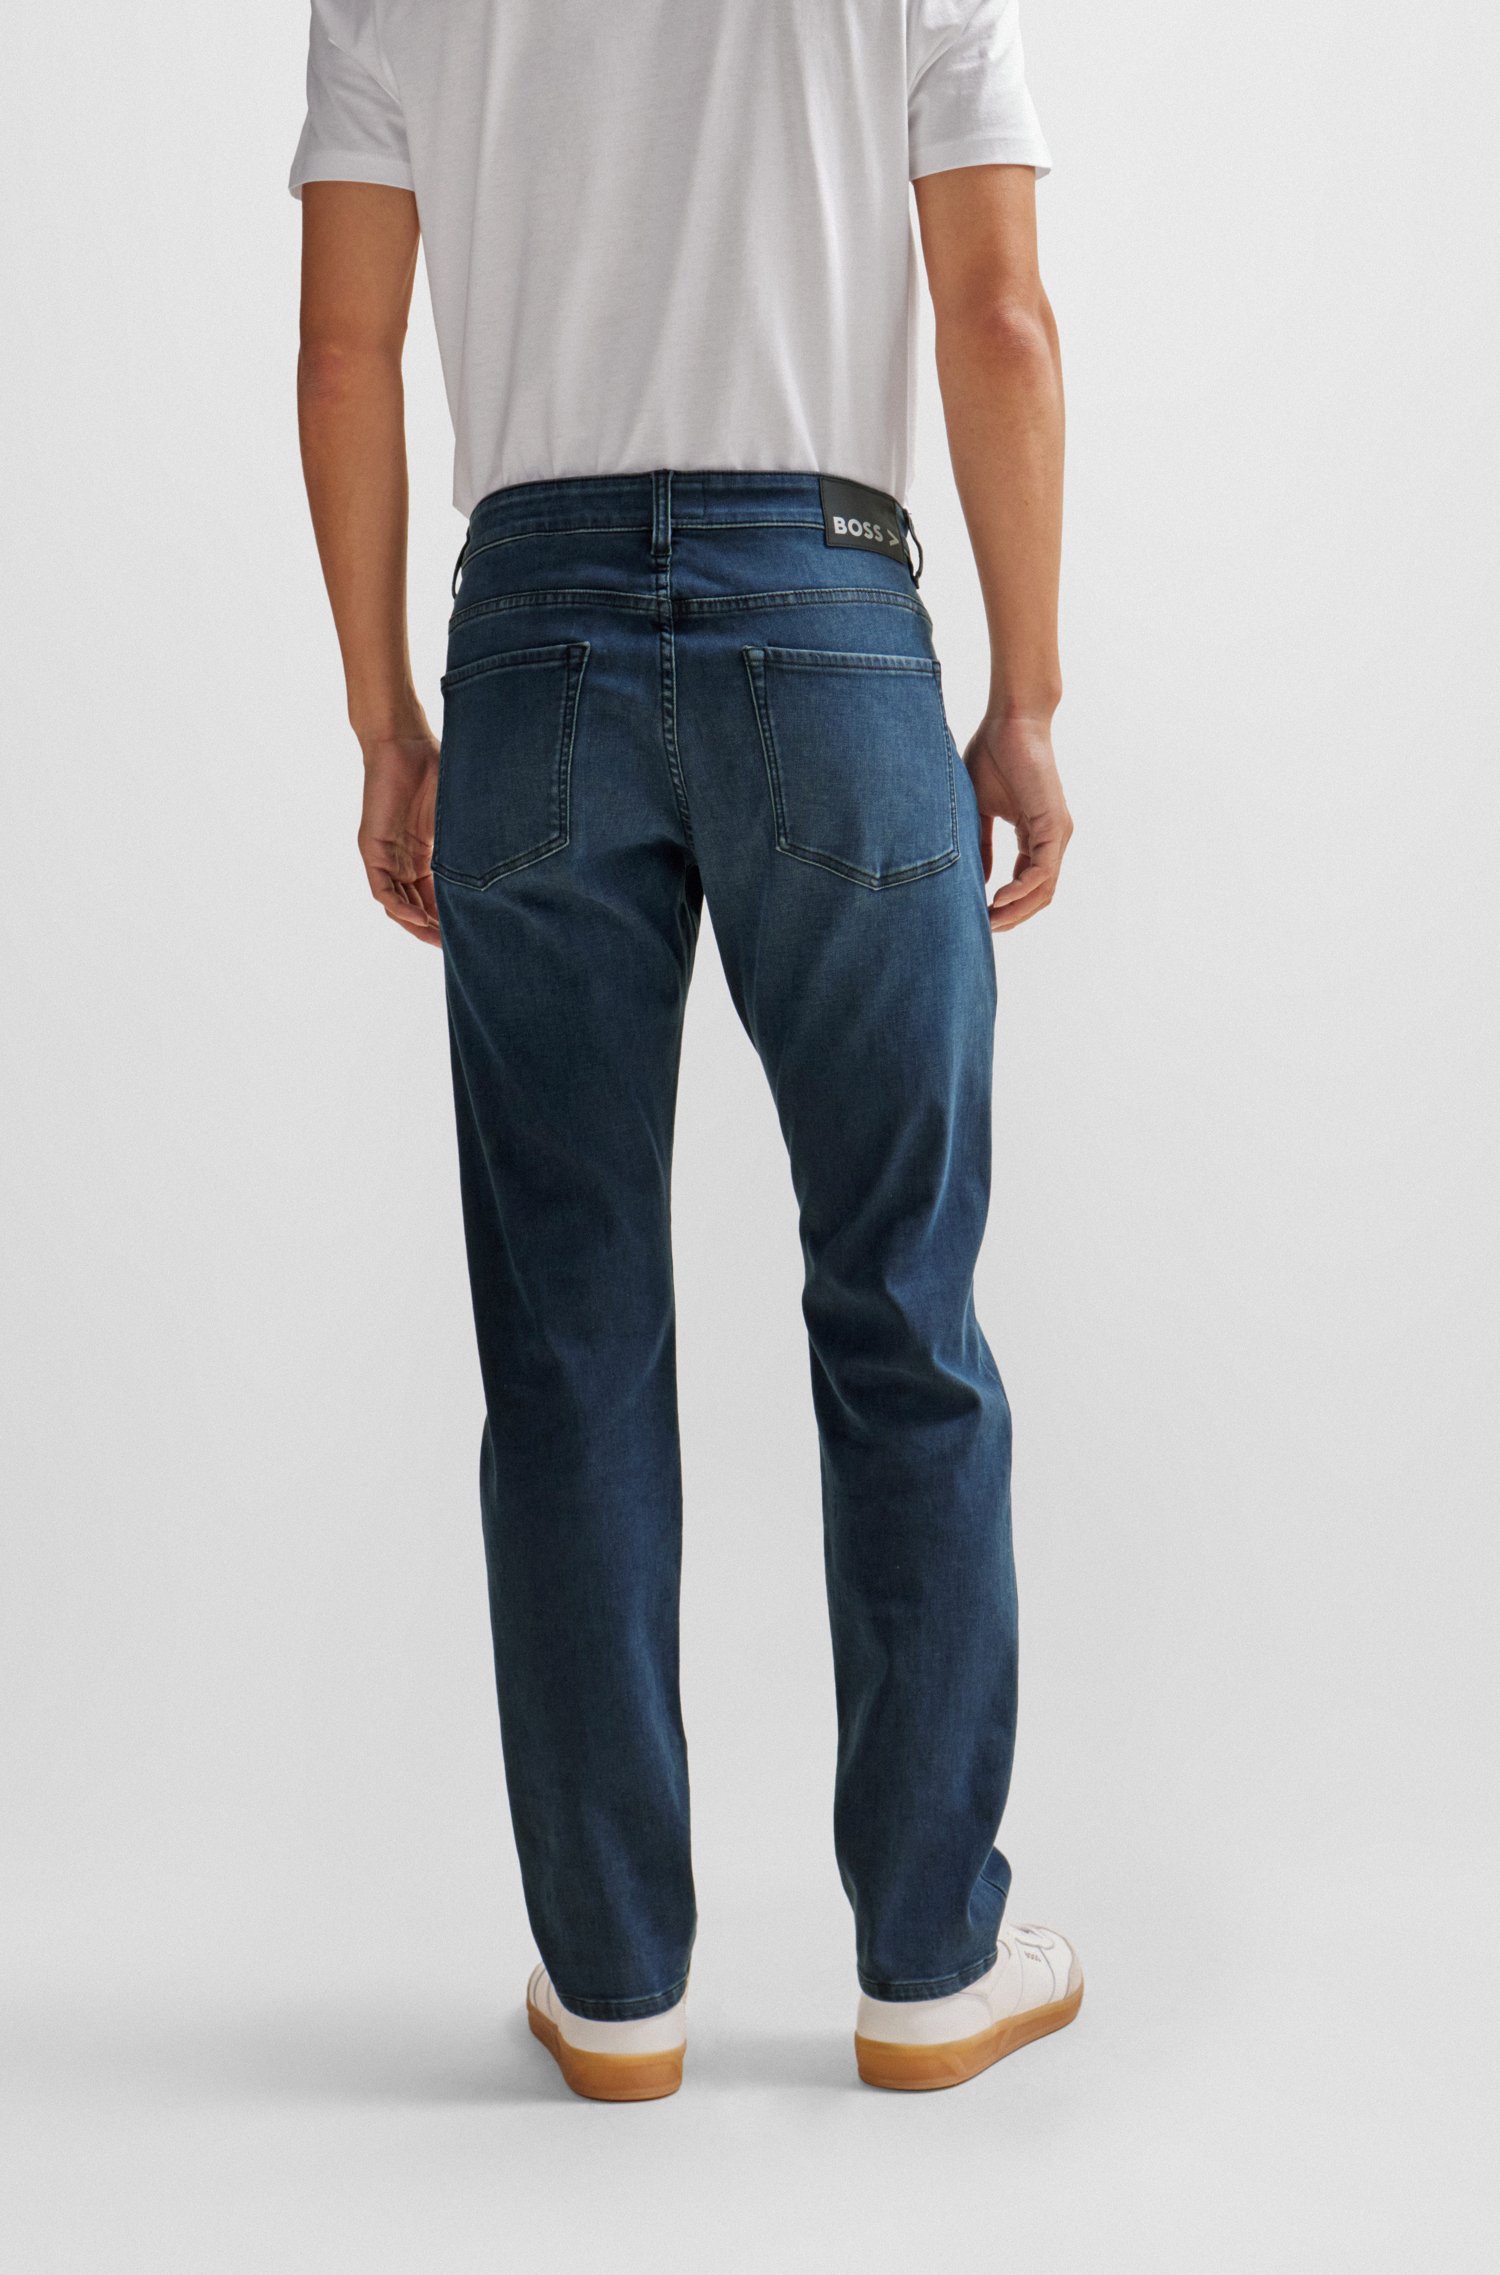 Slim-fit jeans blue performance-stretch denim